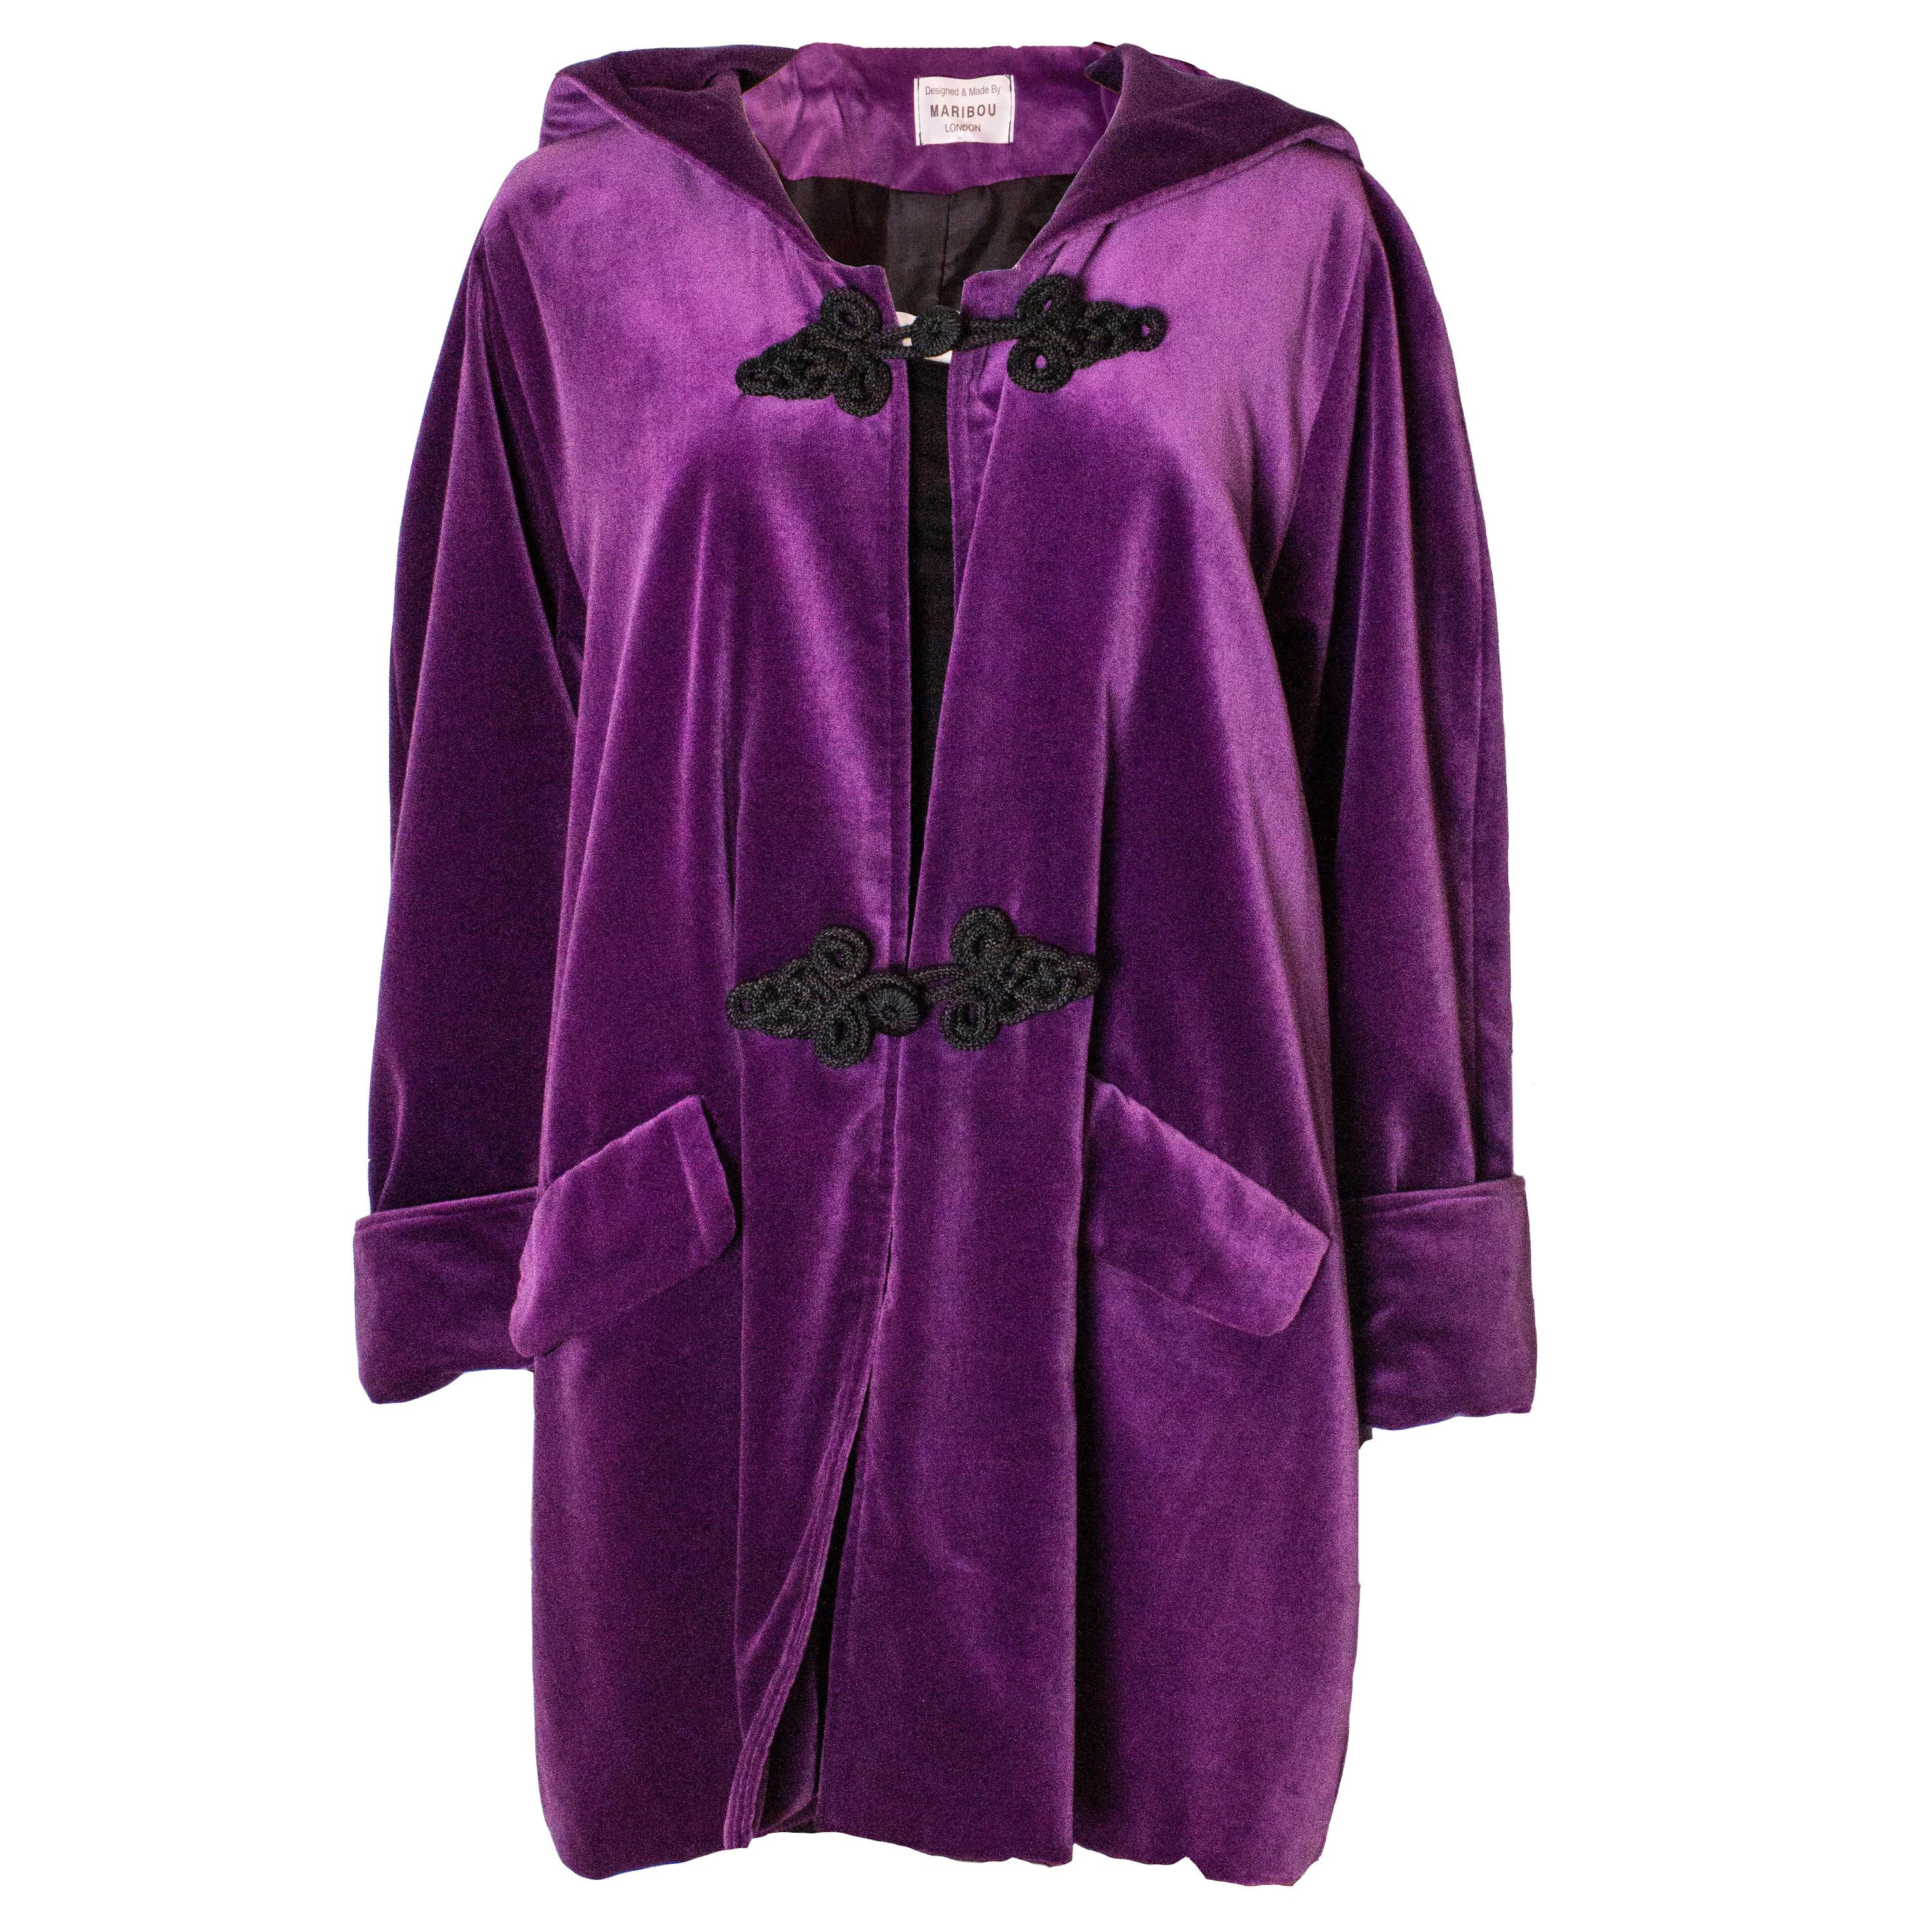 Vintage Purple Velvet Hooded Jacket by Maribou London